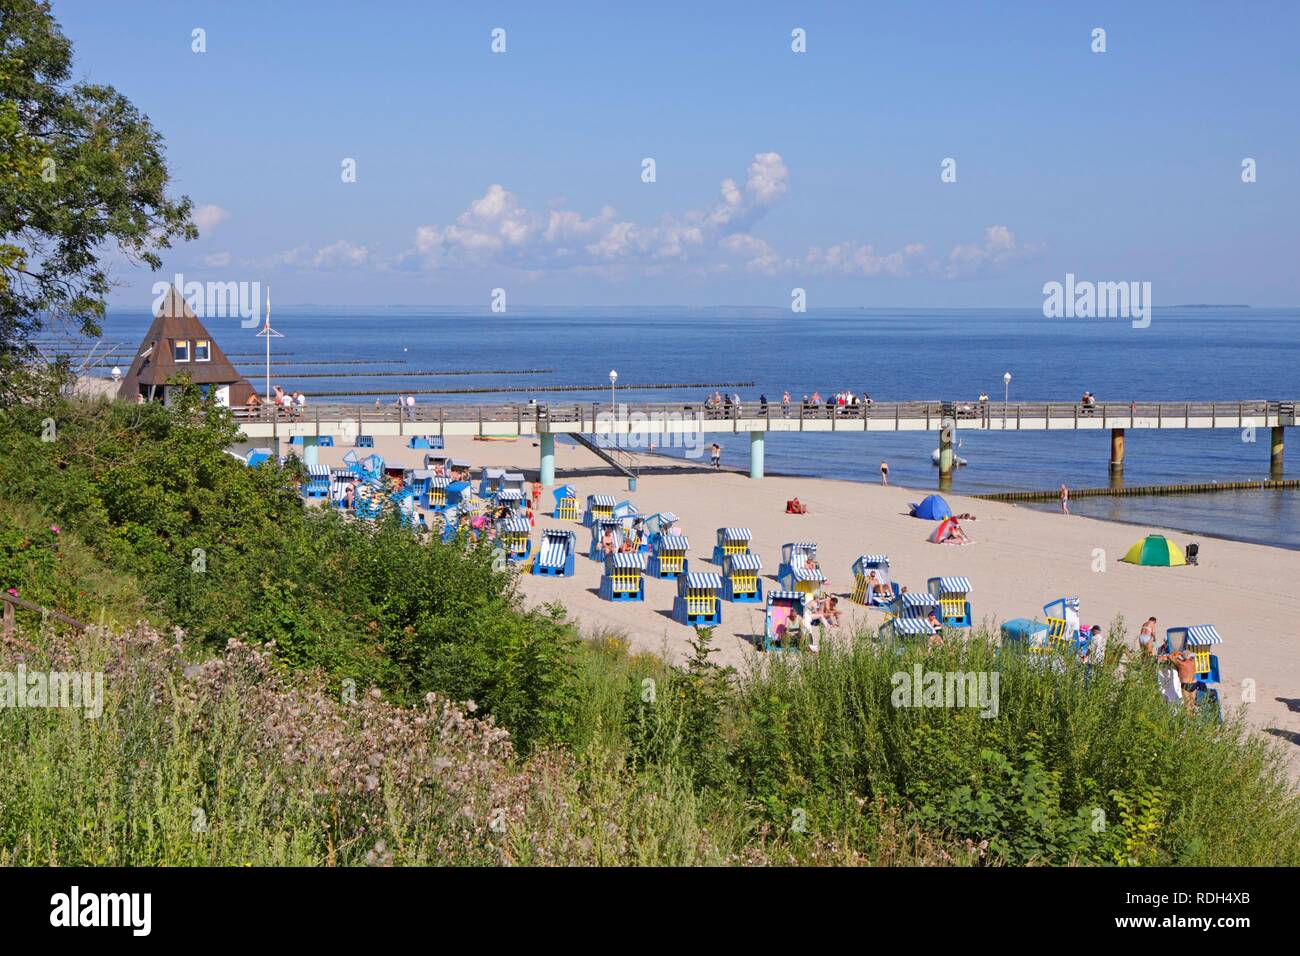 Pier and beach of Koserow, Usedom Island, Baltic Sea Stock Photo